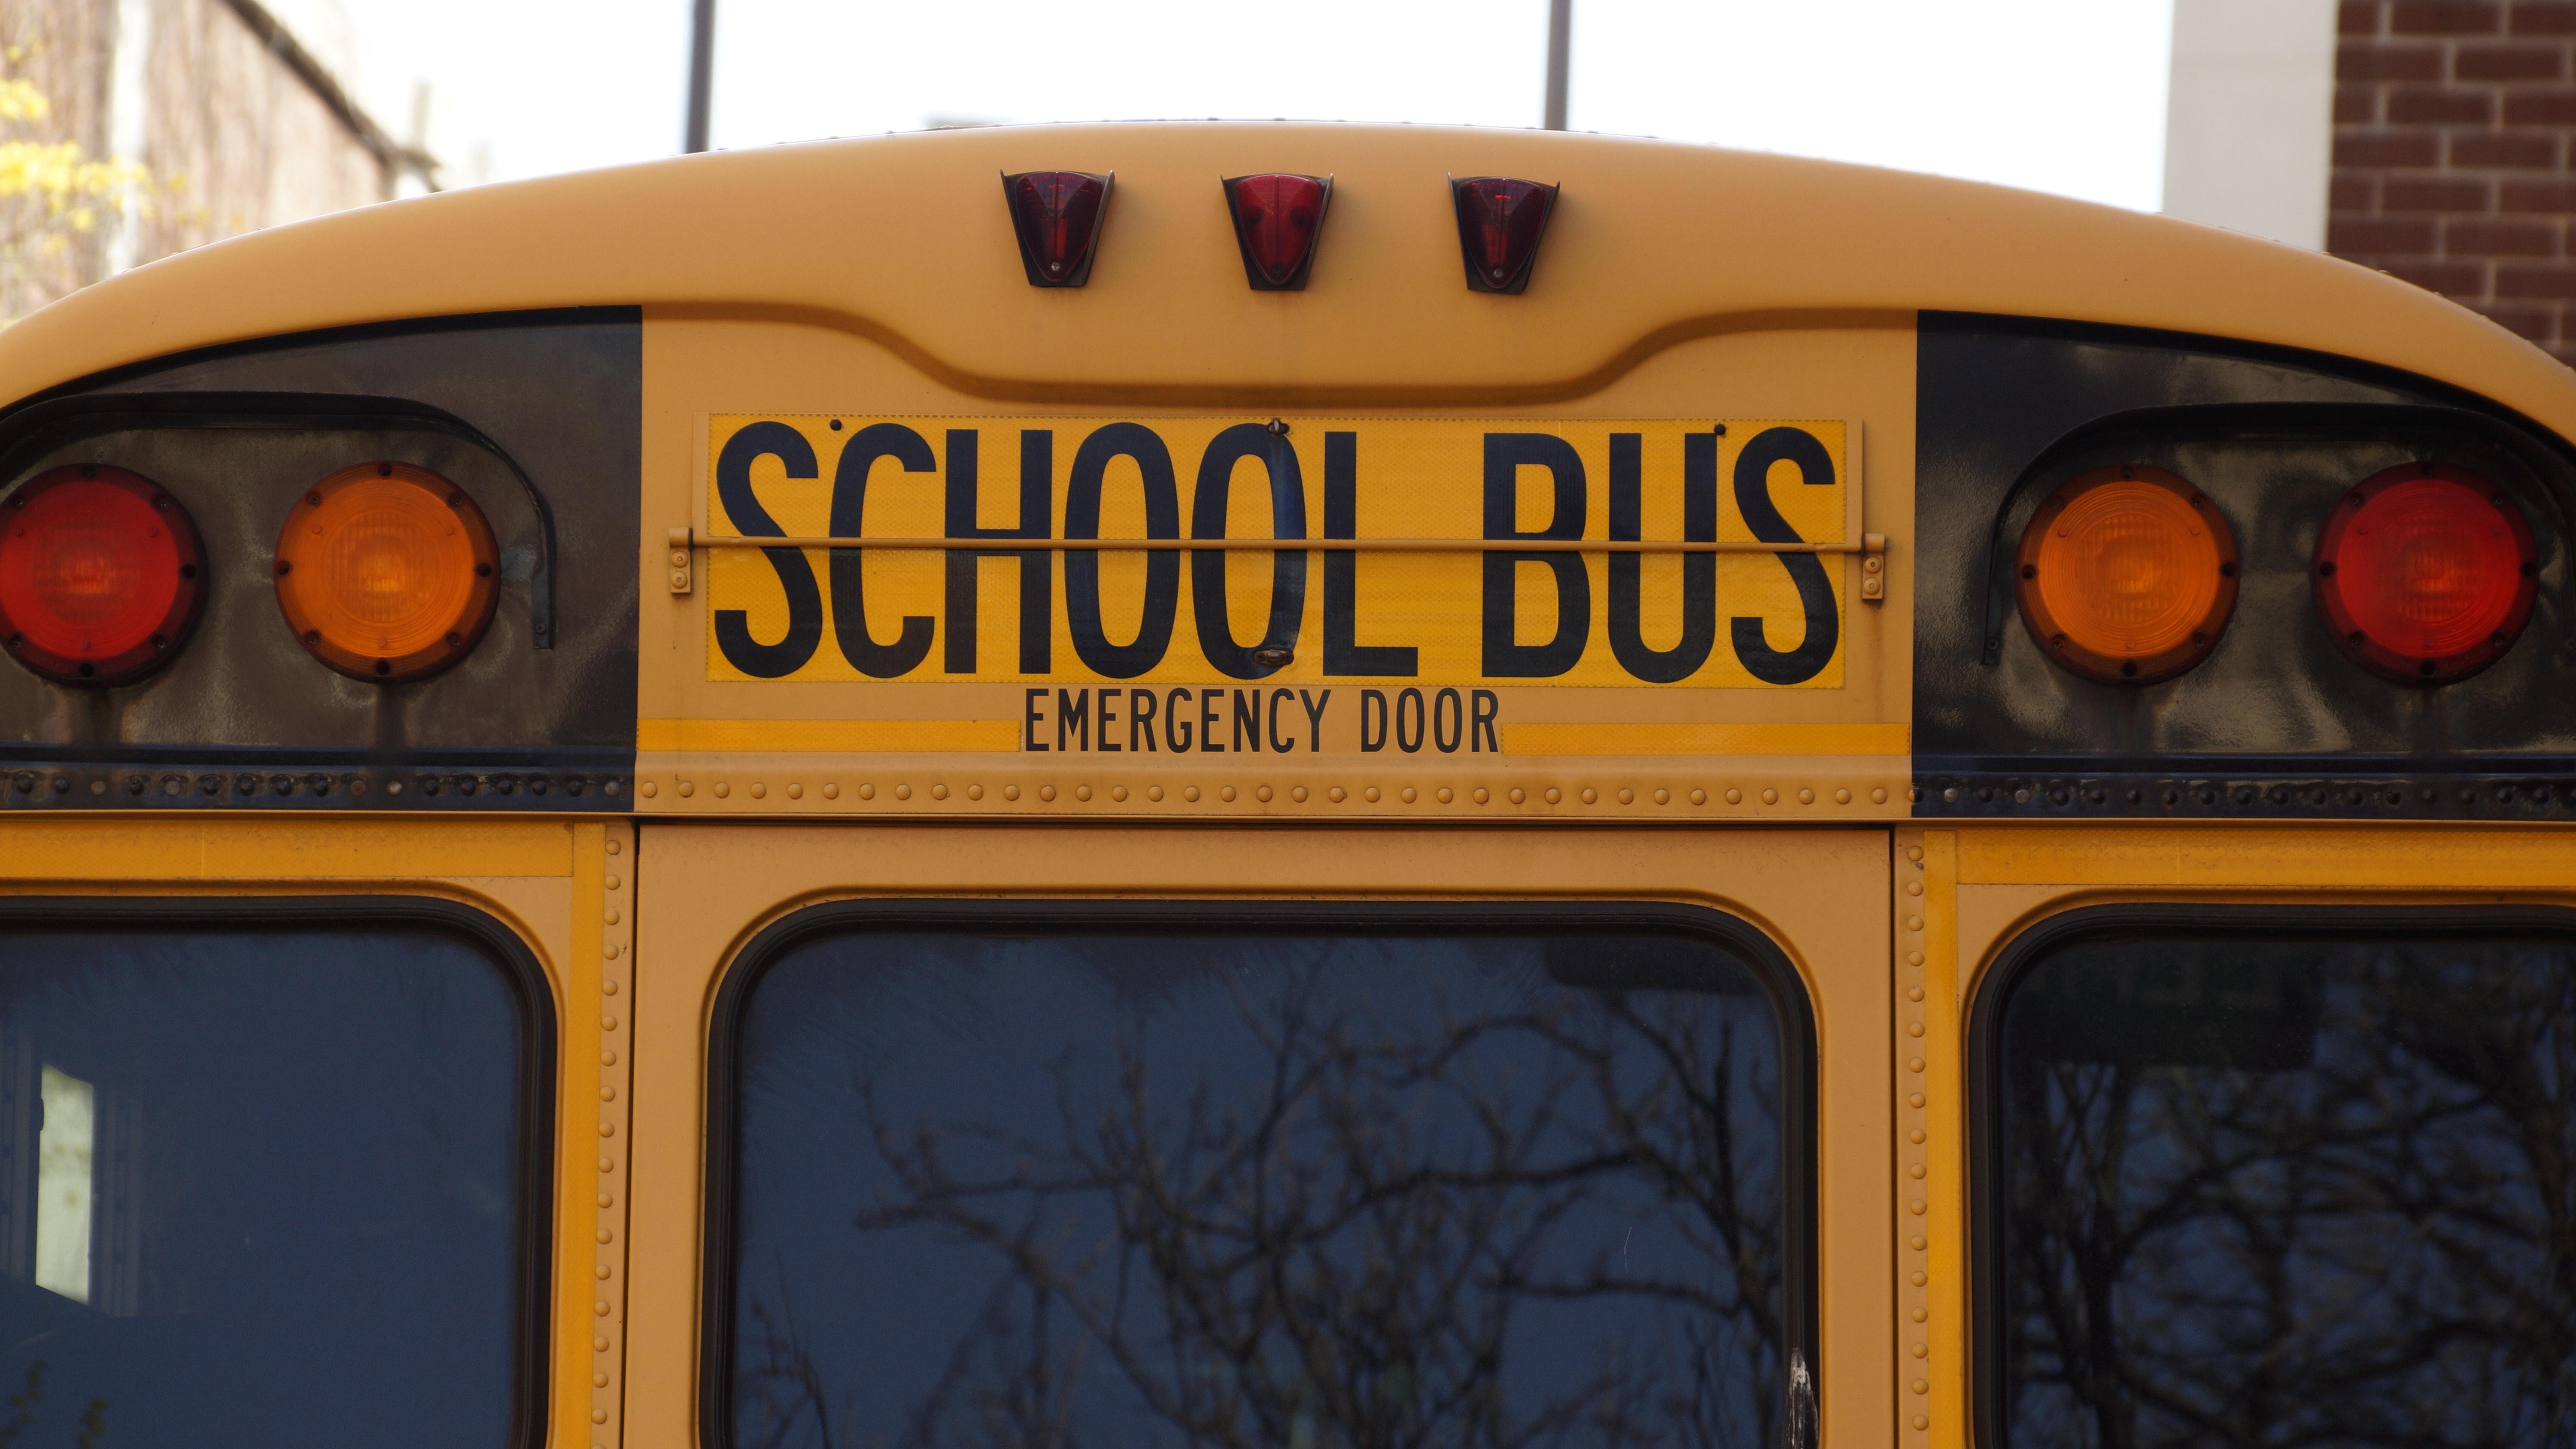 Engaging School Bus Photo